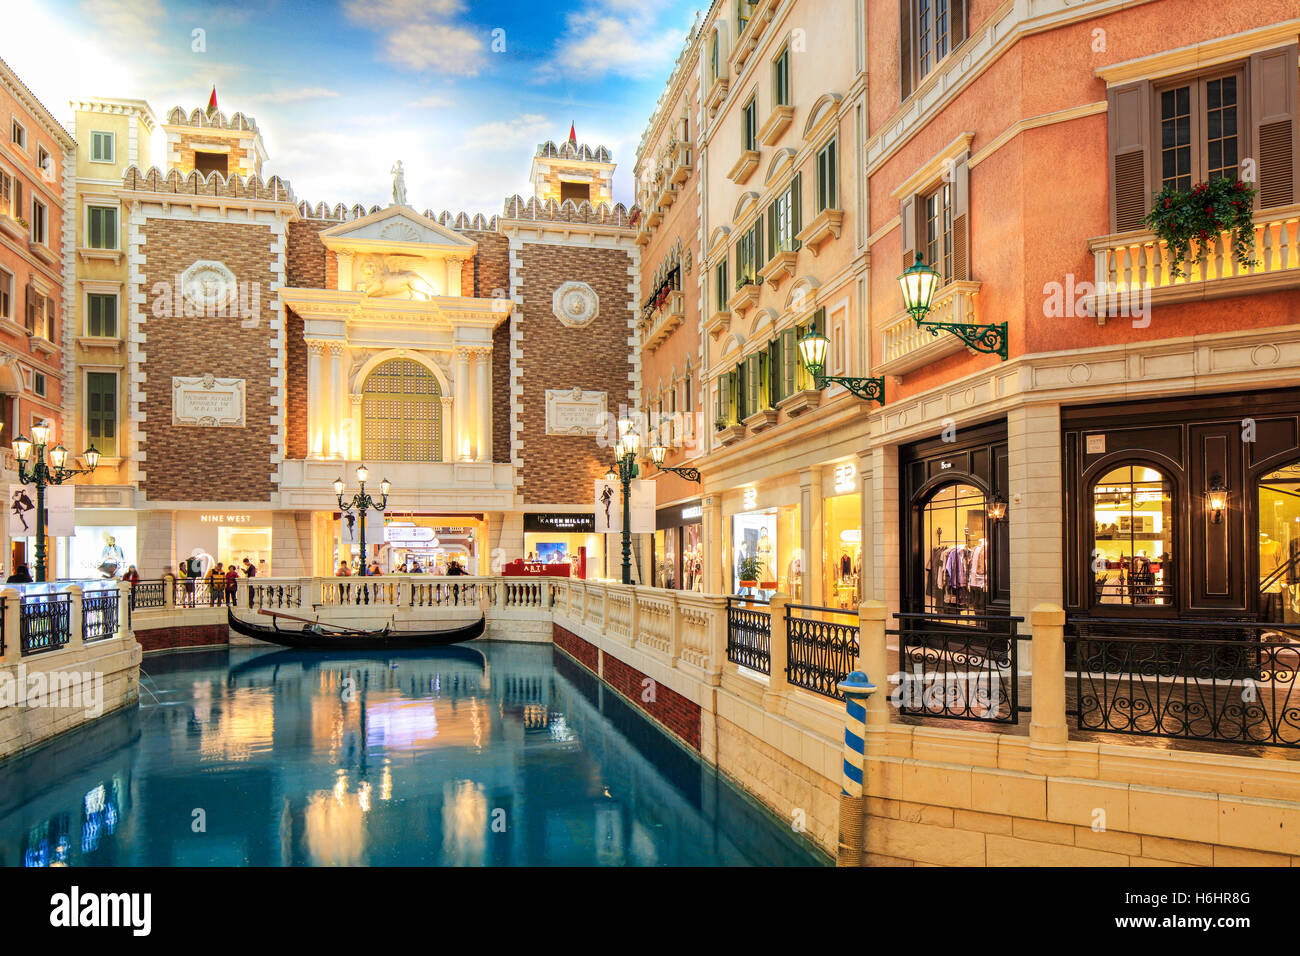 The Grand Canal Shoppes inside the Venetian Hotel, Cotai, Macao. Stock Photo